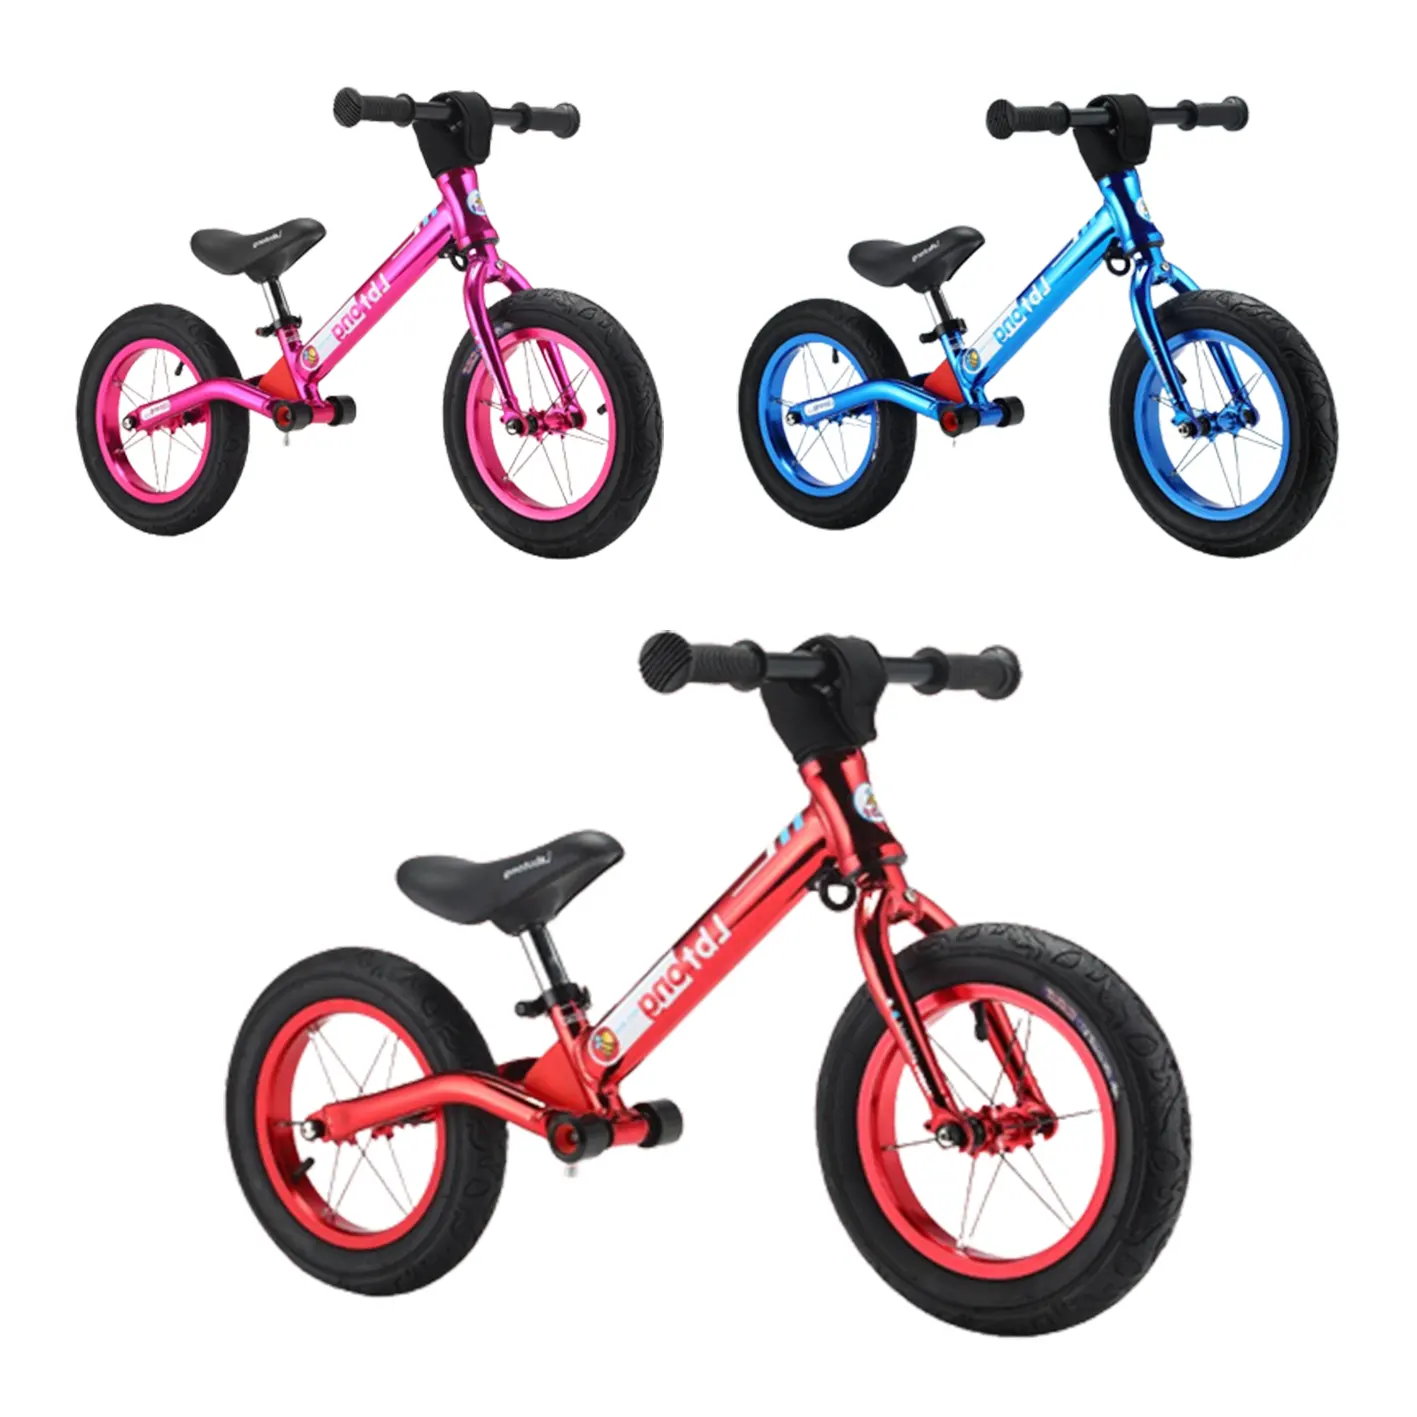 Toy Bike models